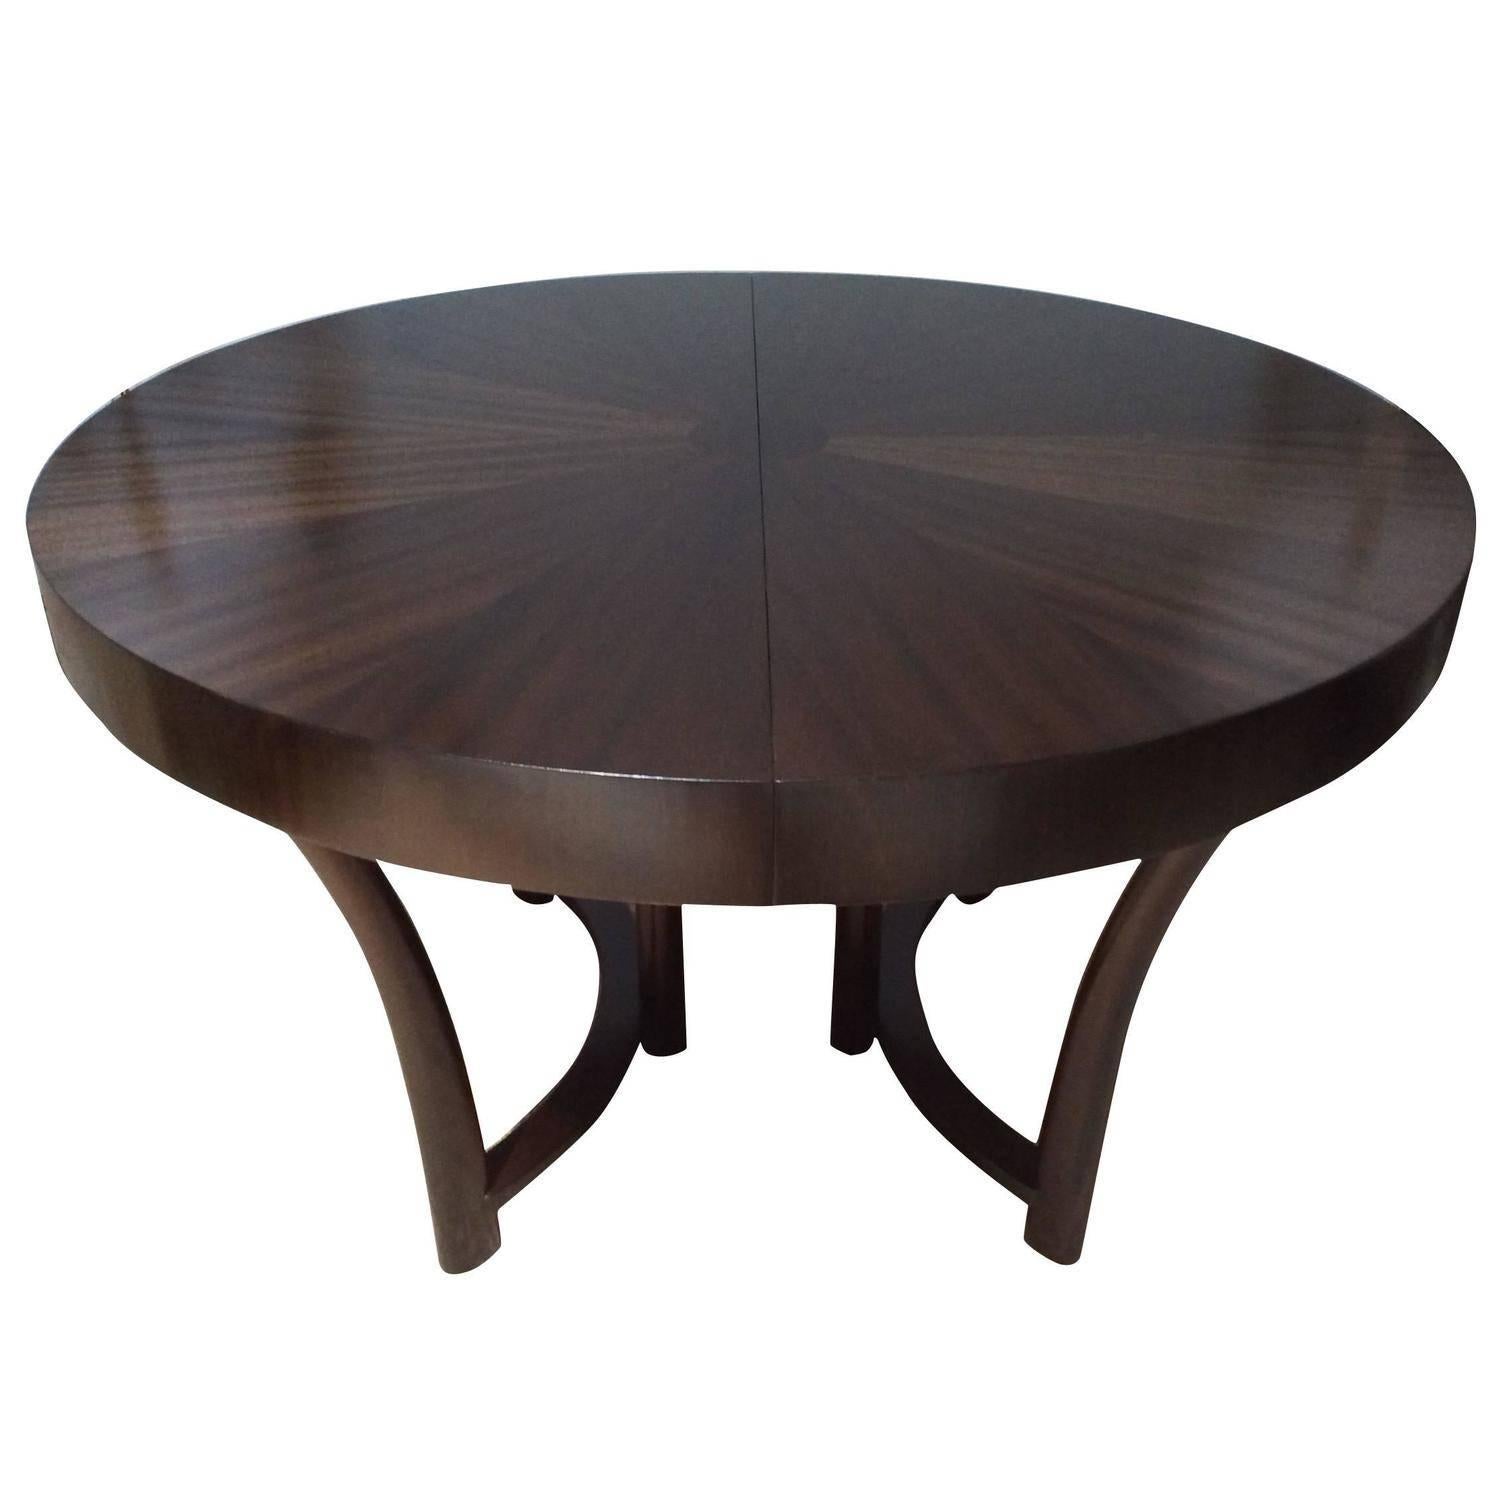 Round Widdicomb Walnut Extension Table, Designed by Robsjohn-Gibbings